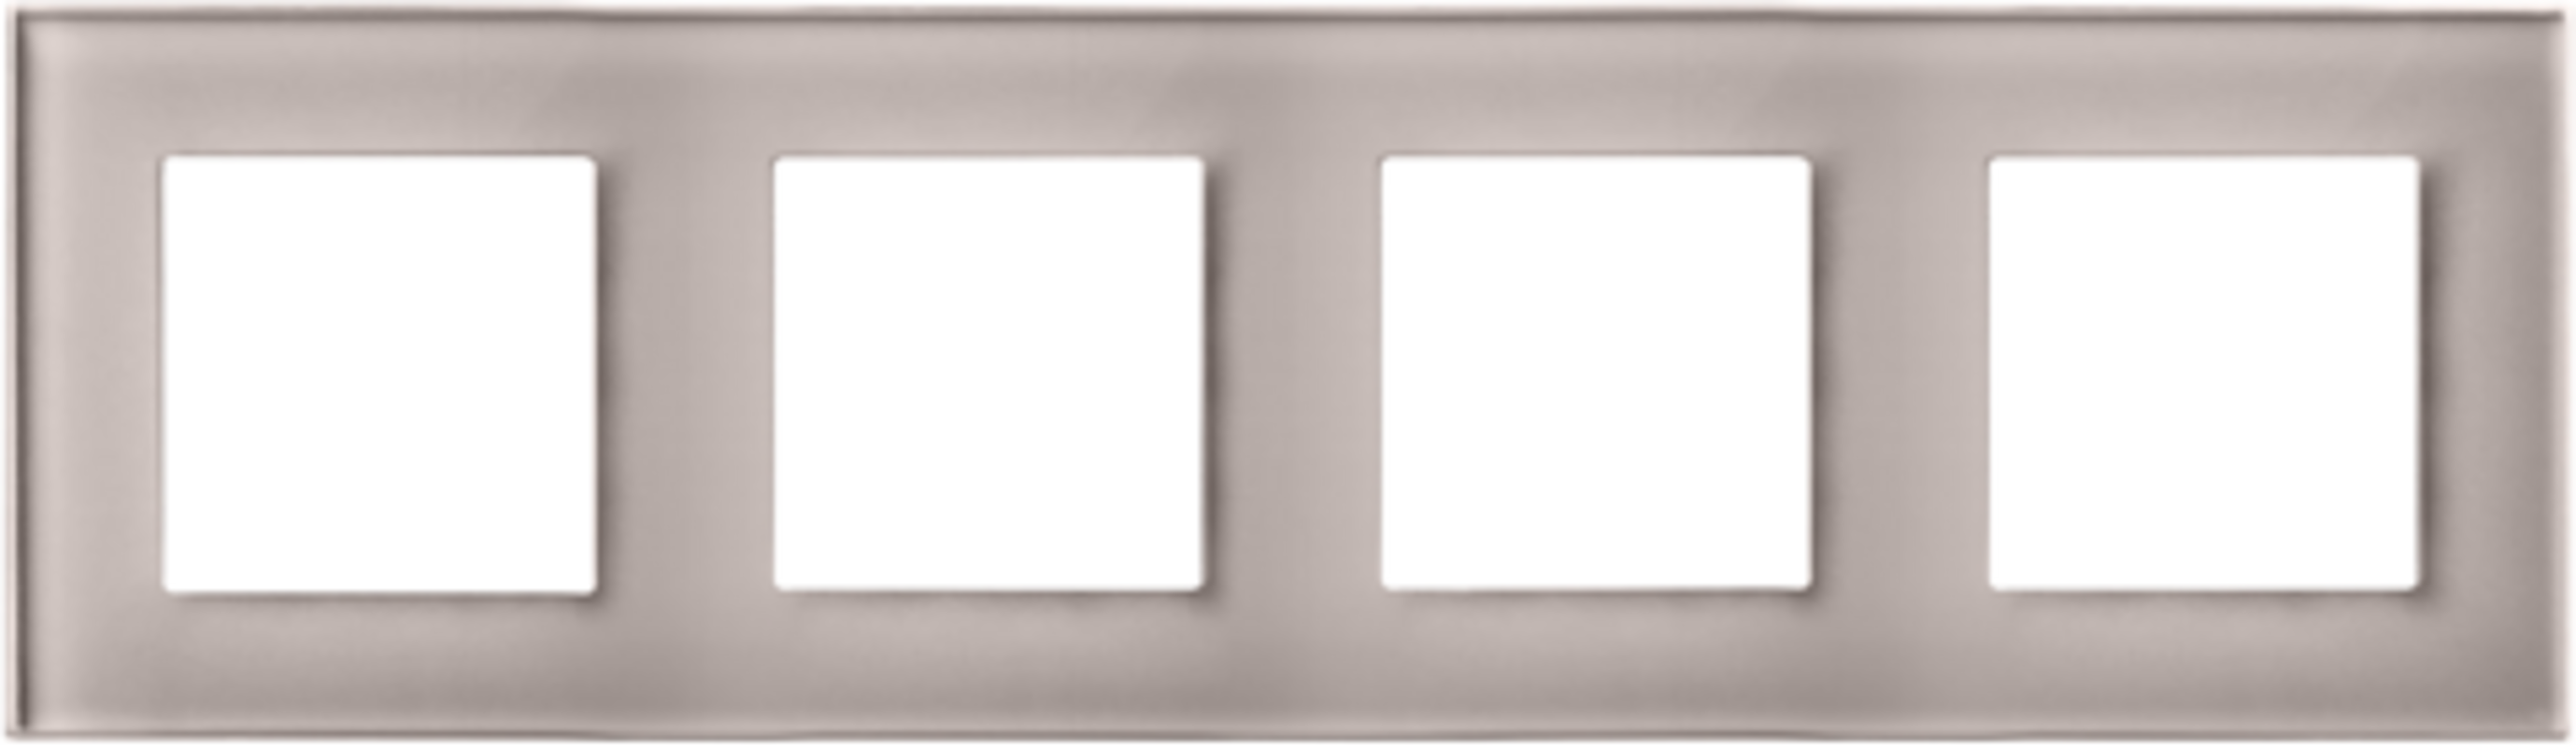 91079396 Рамка для розеток и выключателей GL-P104-LSG 4 поста цвет дымчатый Эстетика STLM-0473117 CGSS